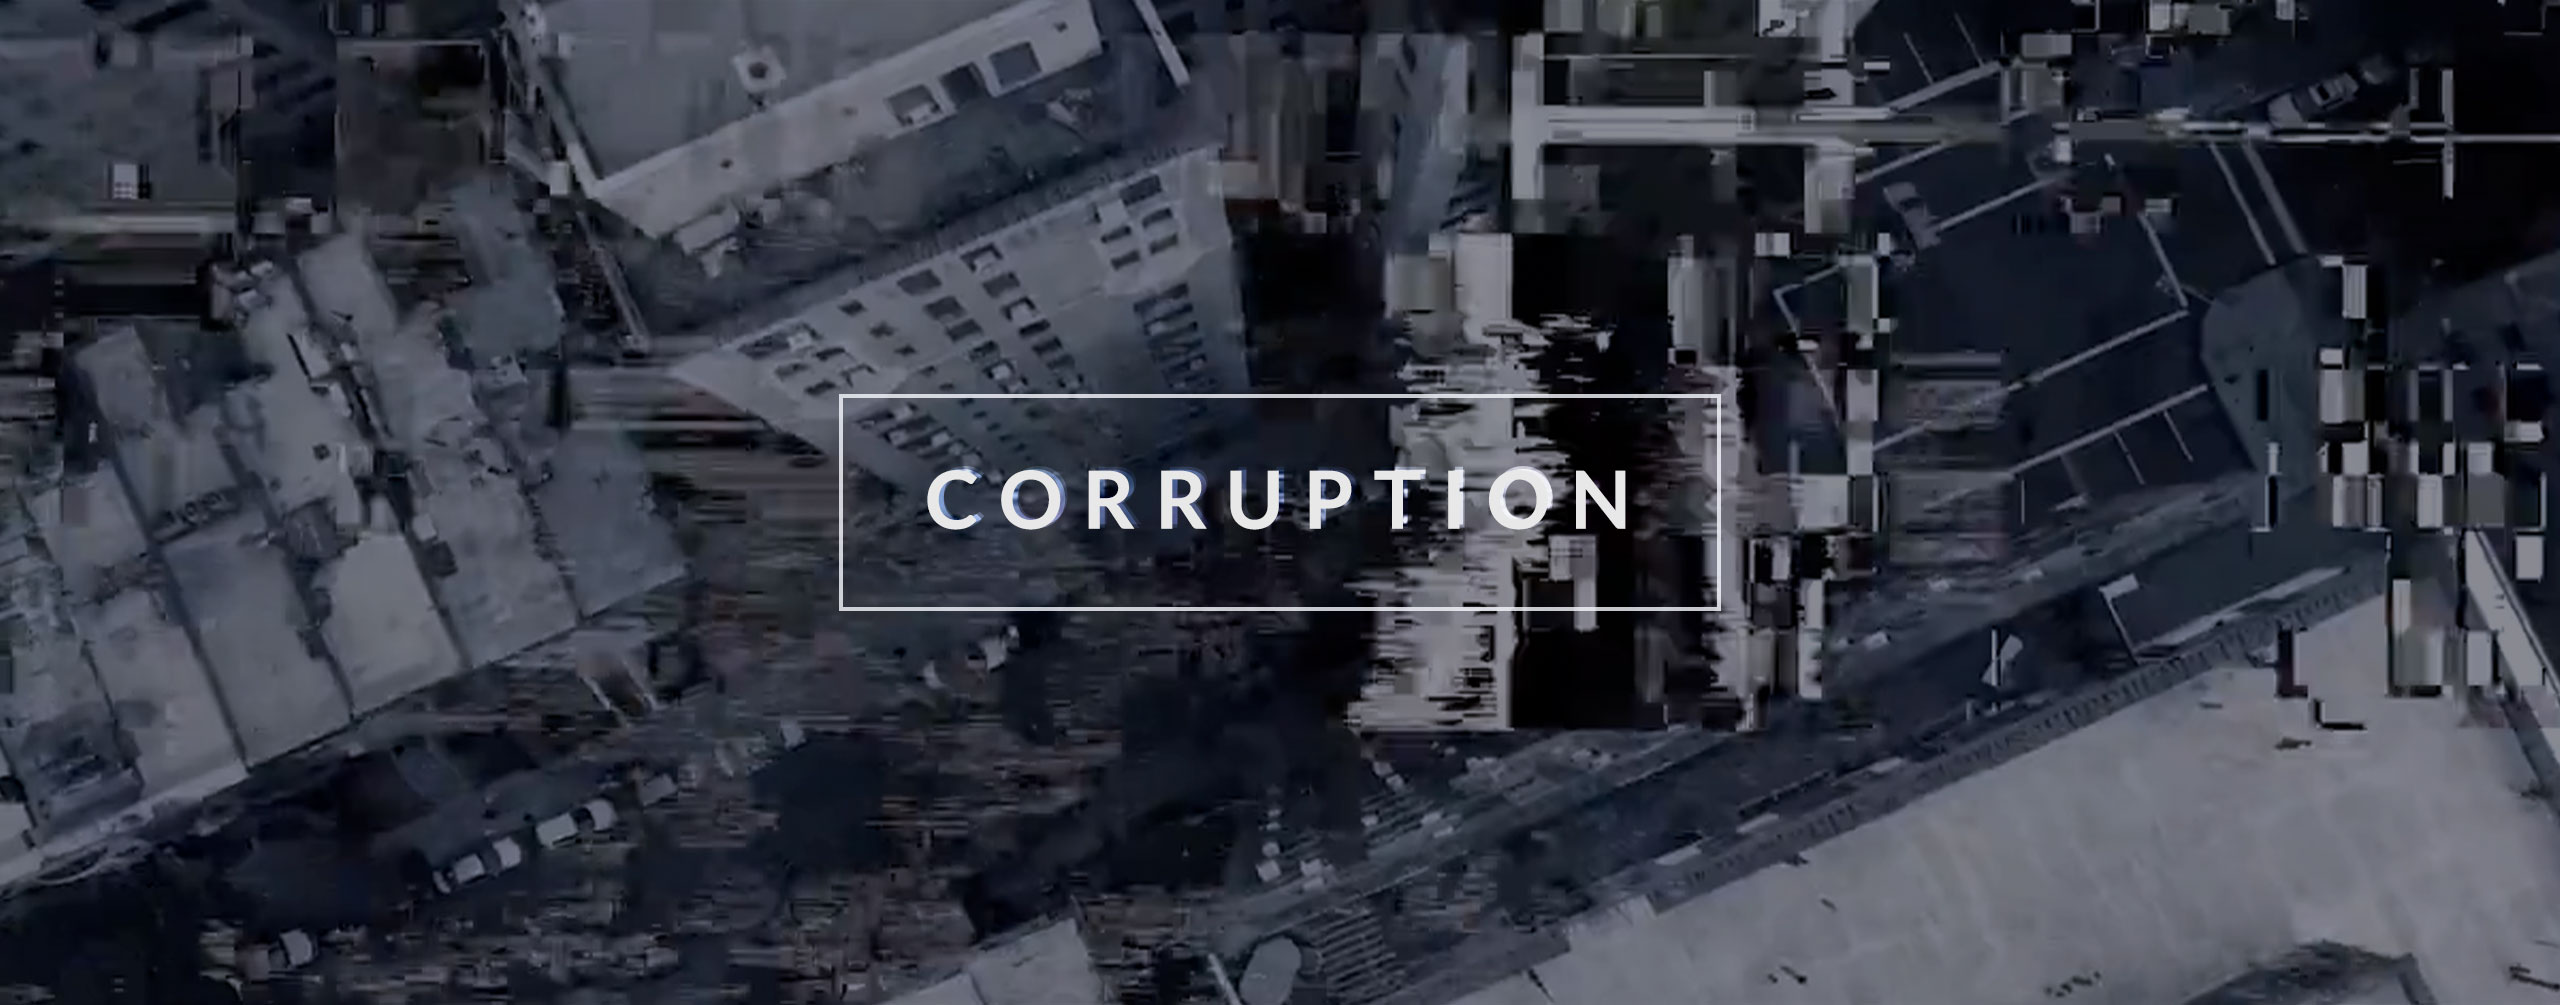 Corruption - Distortion Video Elements